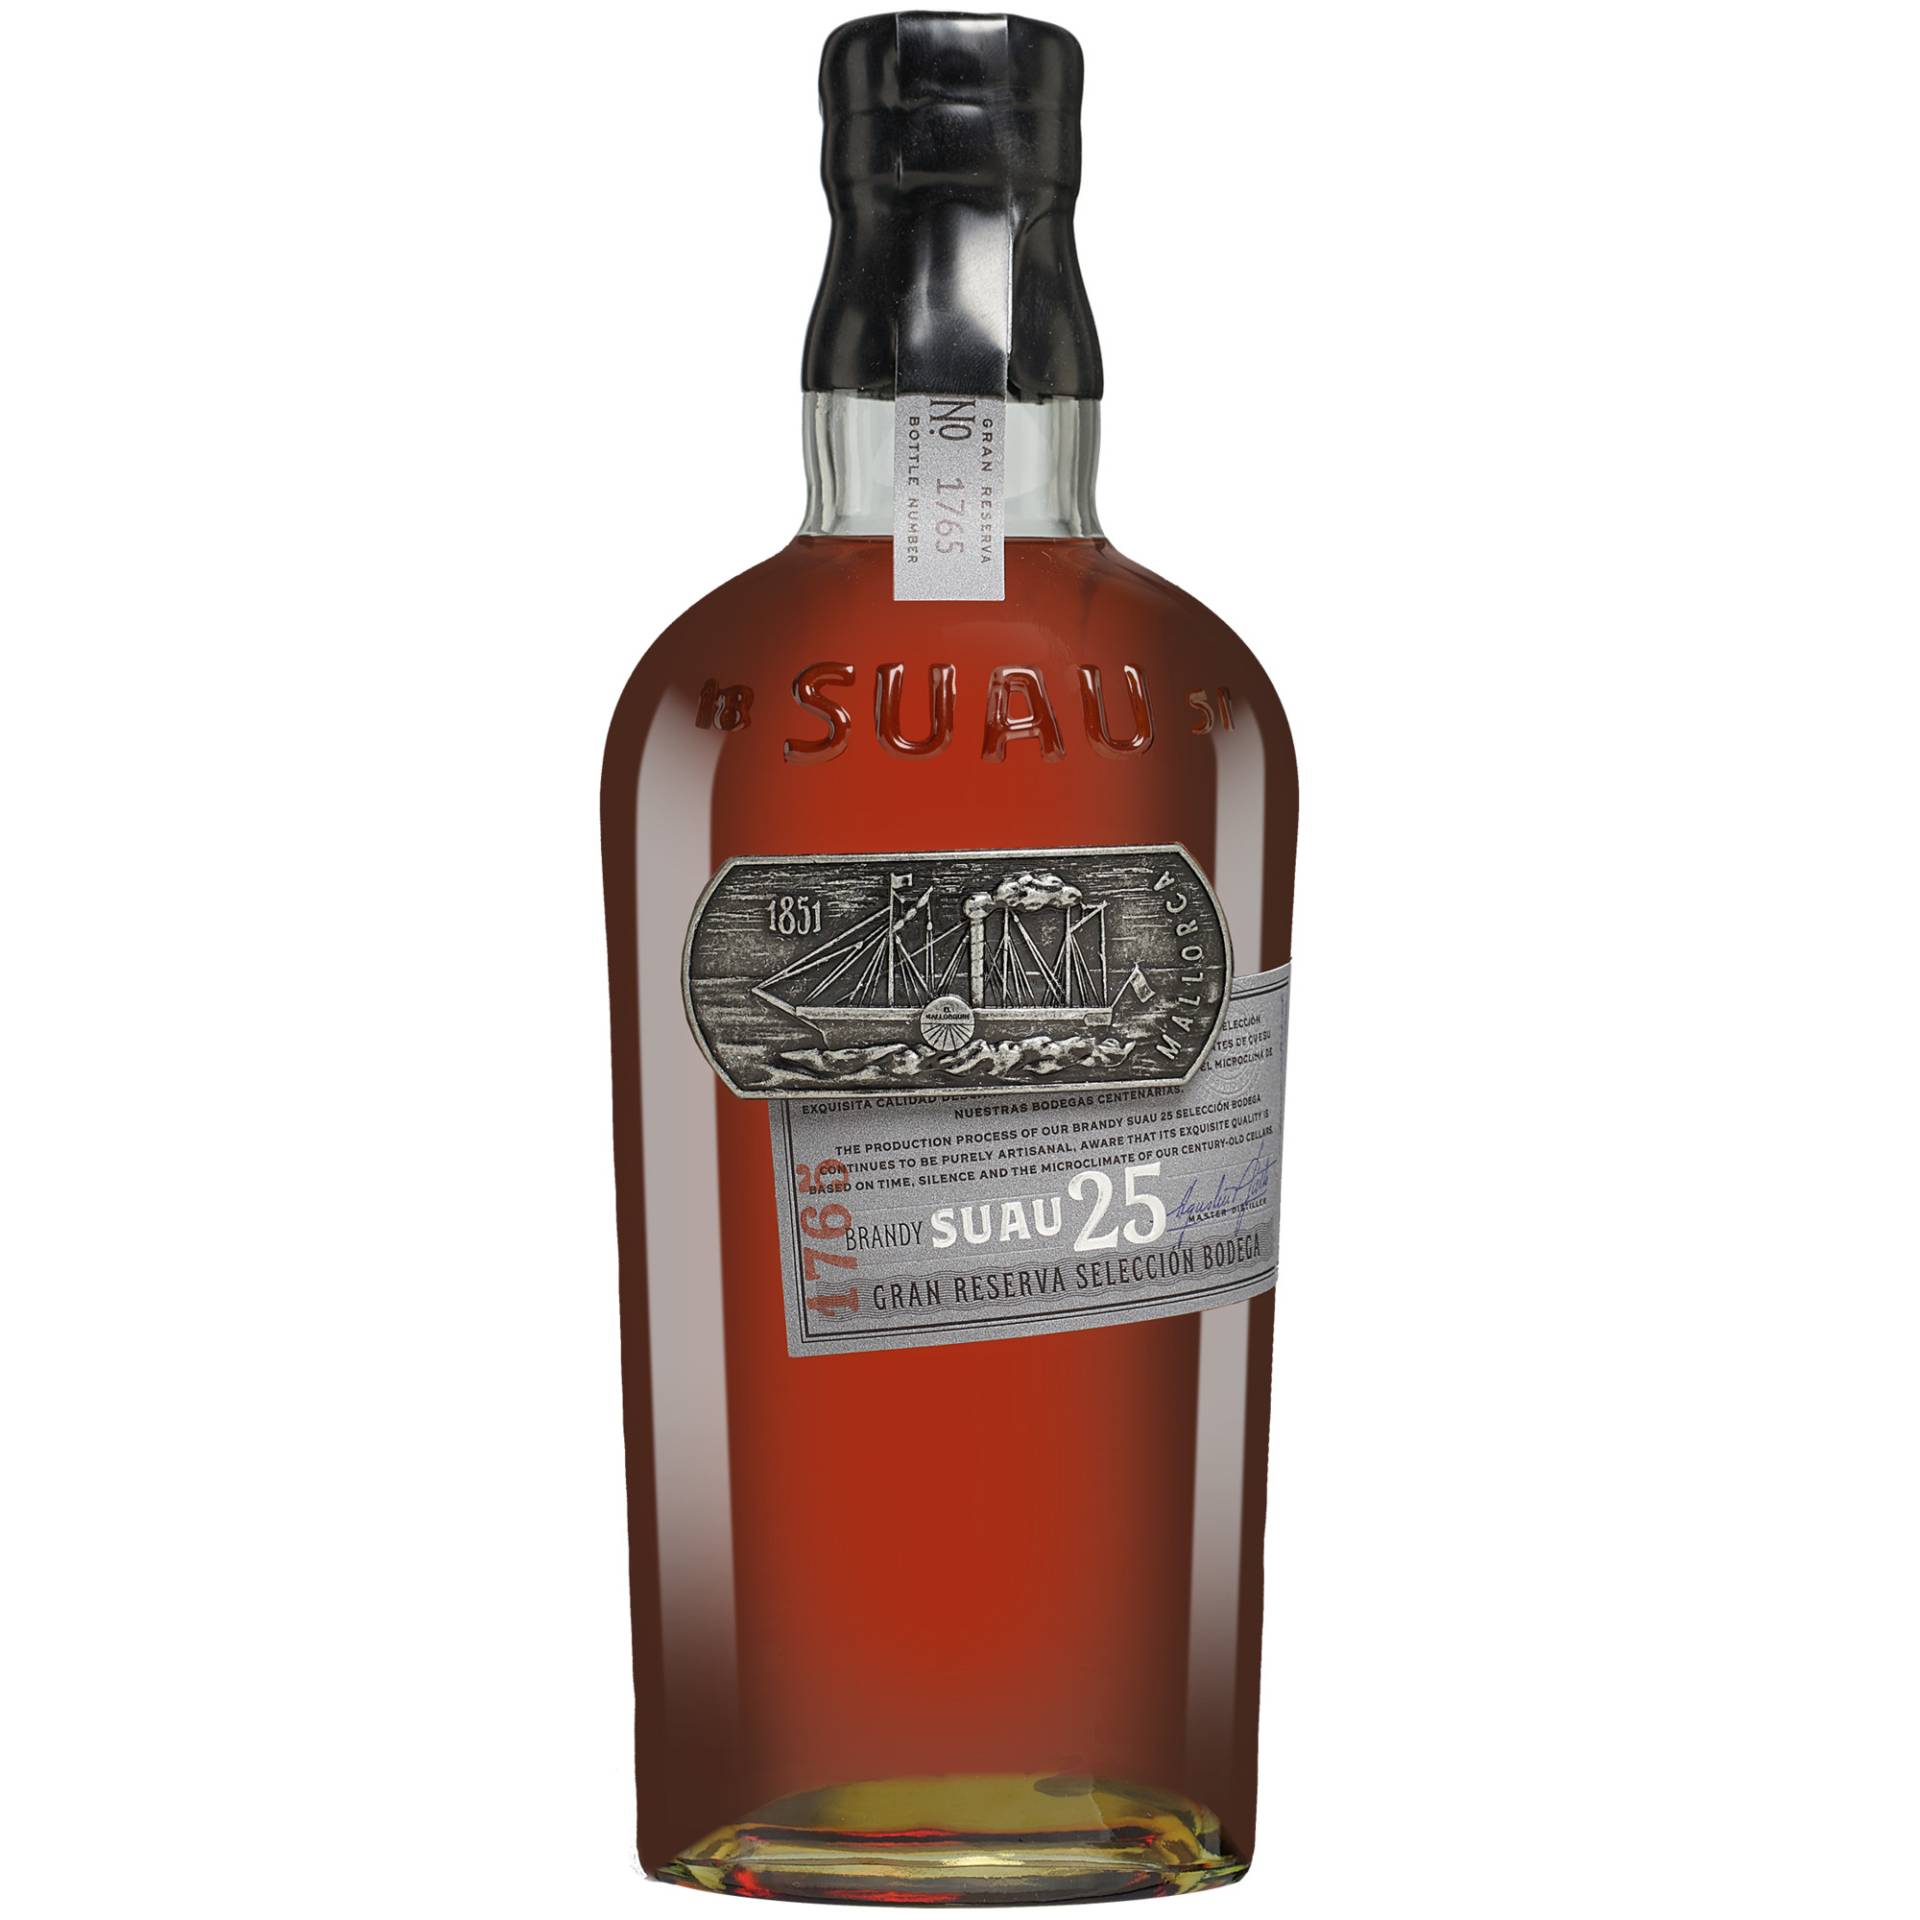 Brandy Suau »25 Años« Solera Gran Reserva - 0,7 L.  0.7L 37% Vol. Brandy aus Spanien von Suau